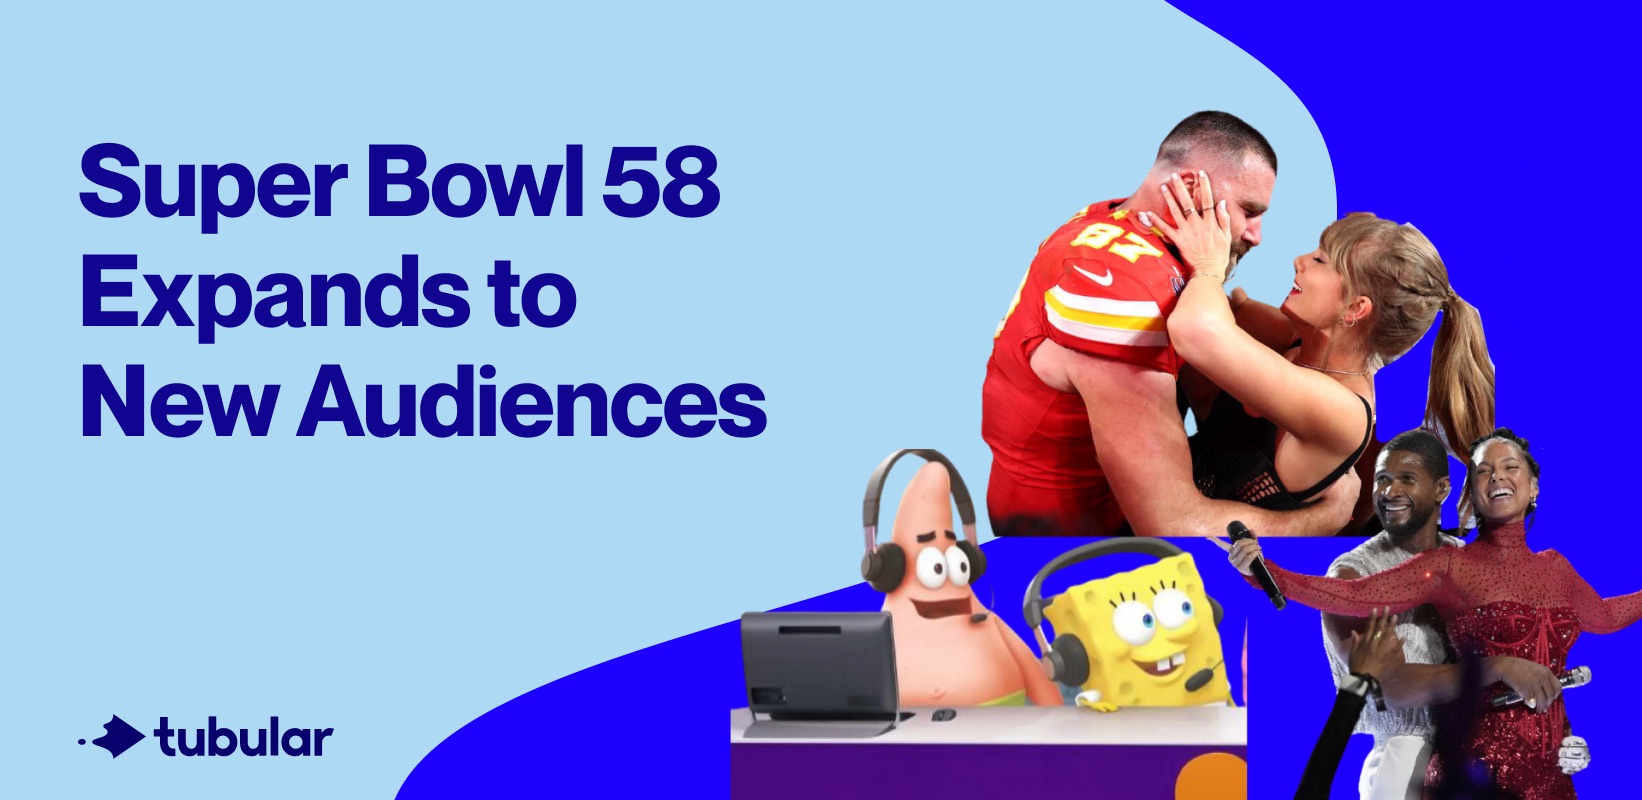 Super Bowl 58 Expands to New Audiences